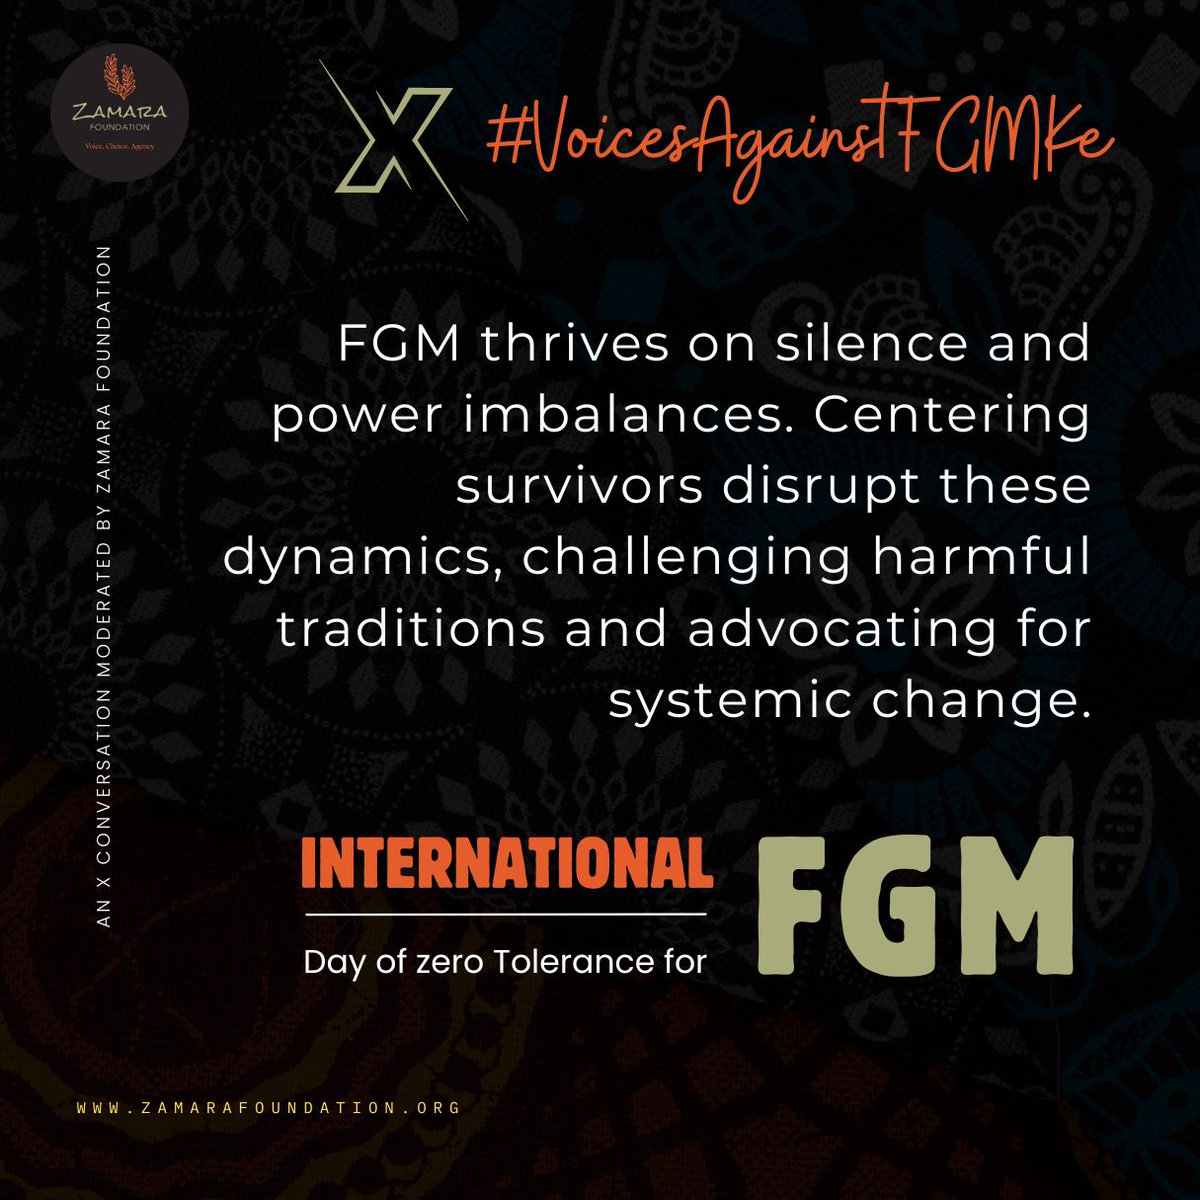 Dismantle patriarchy liberate women
End FGM Kenya
#voicesAgainstFGMke
#zamaravoices